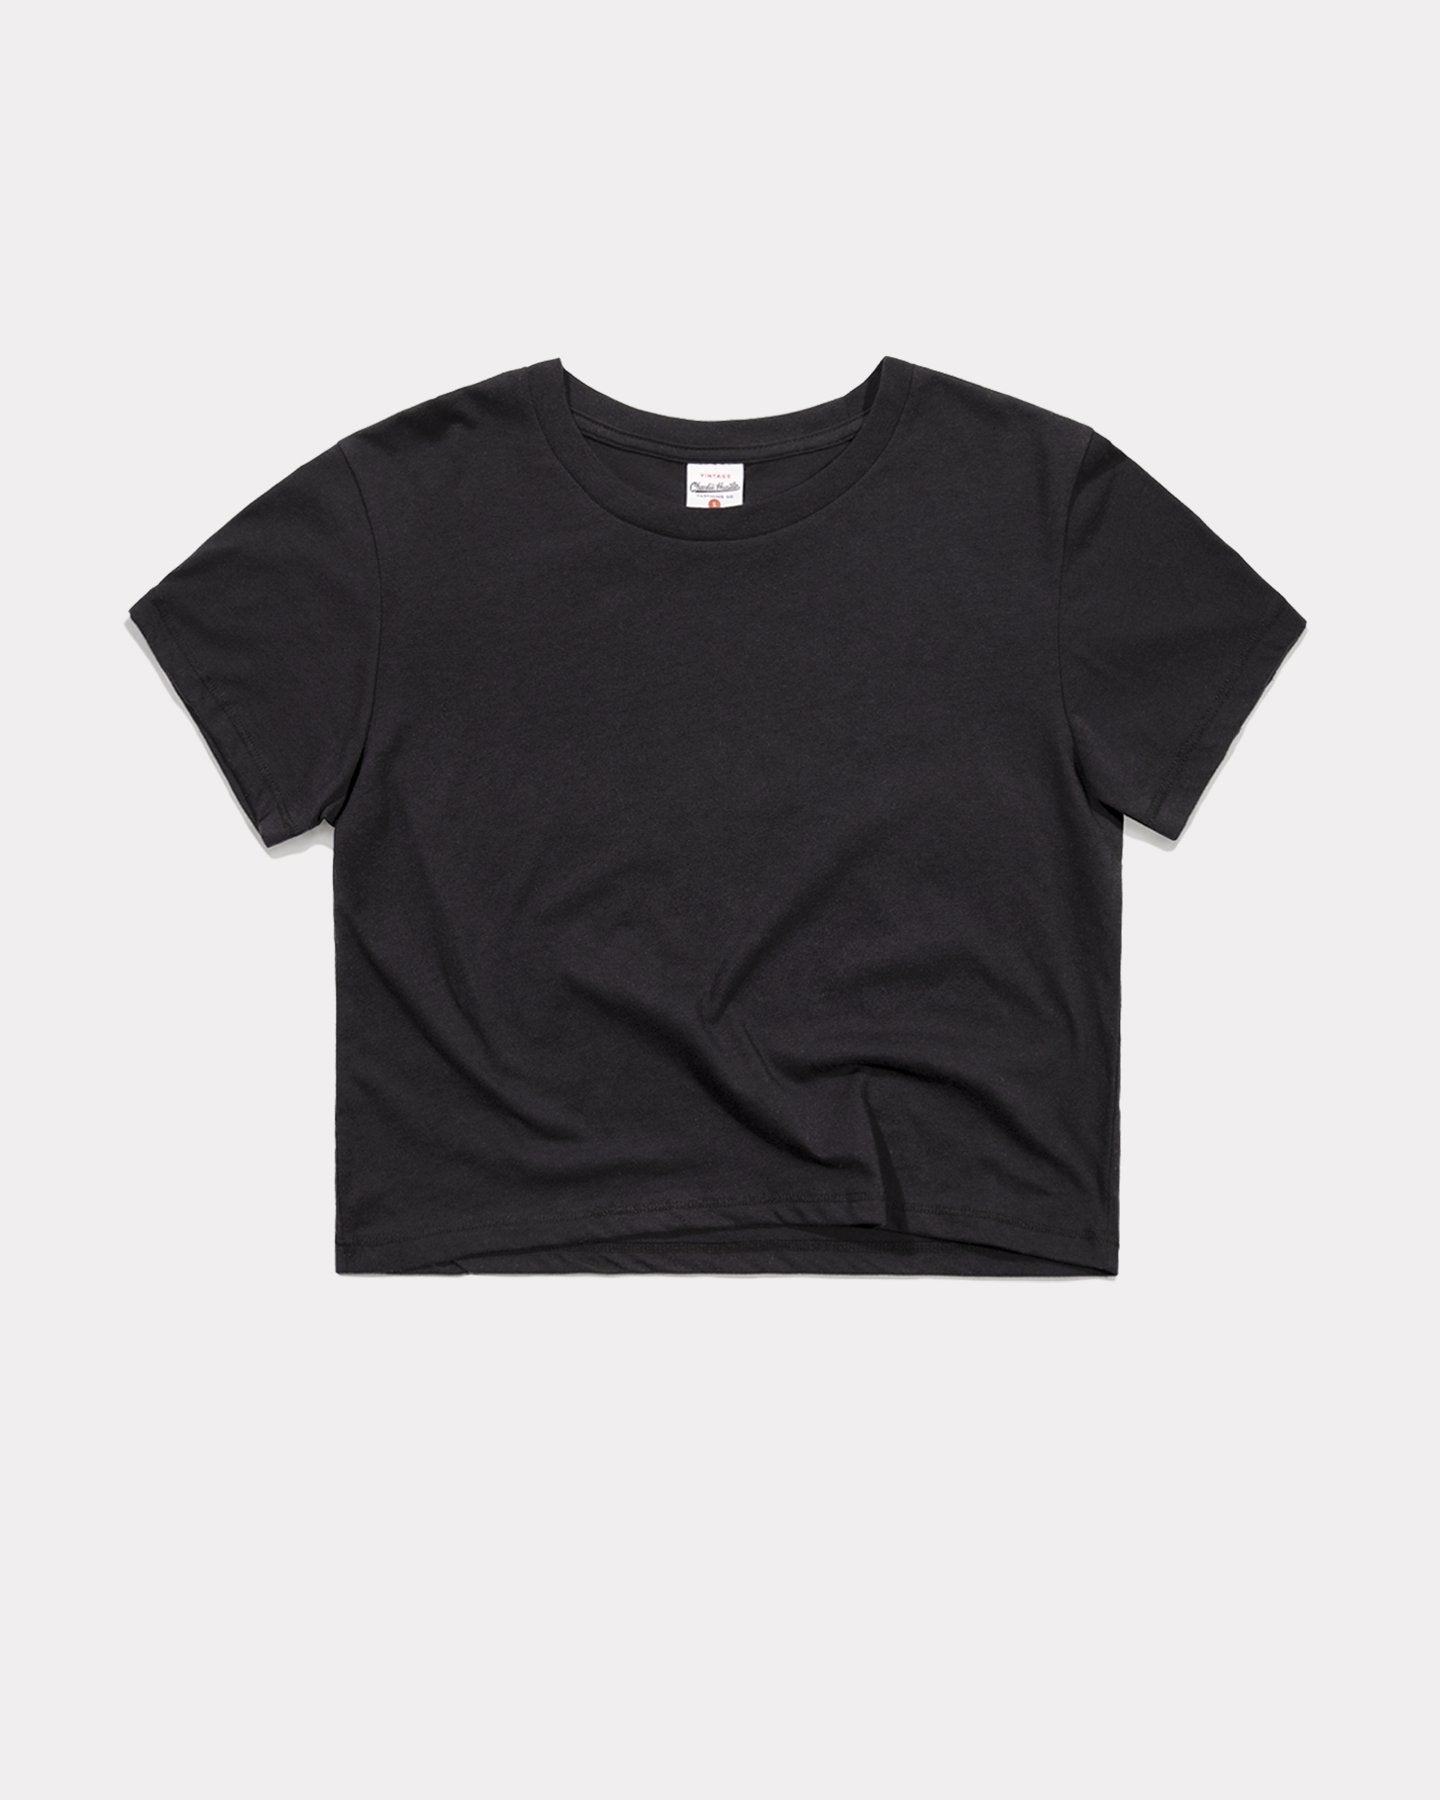 Women's Essential Black Vintage Crop Top T-Shirt